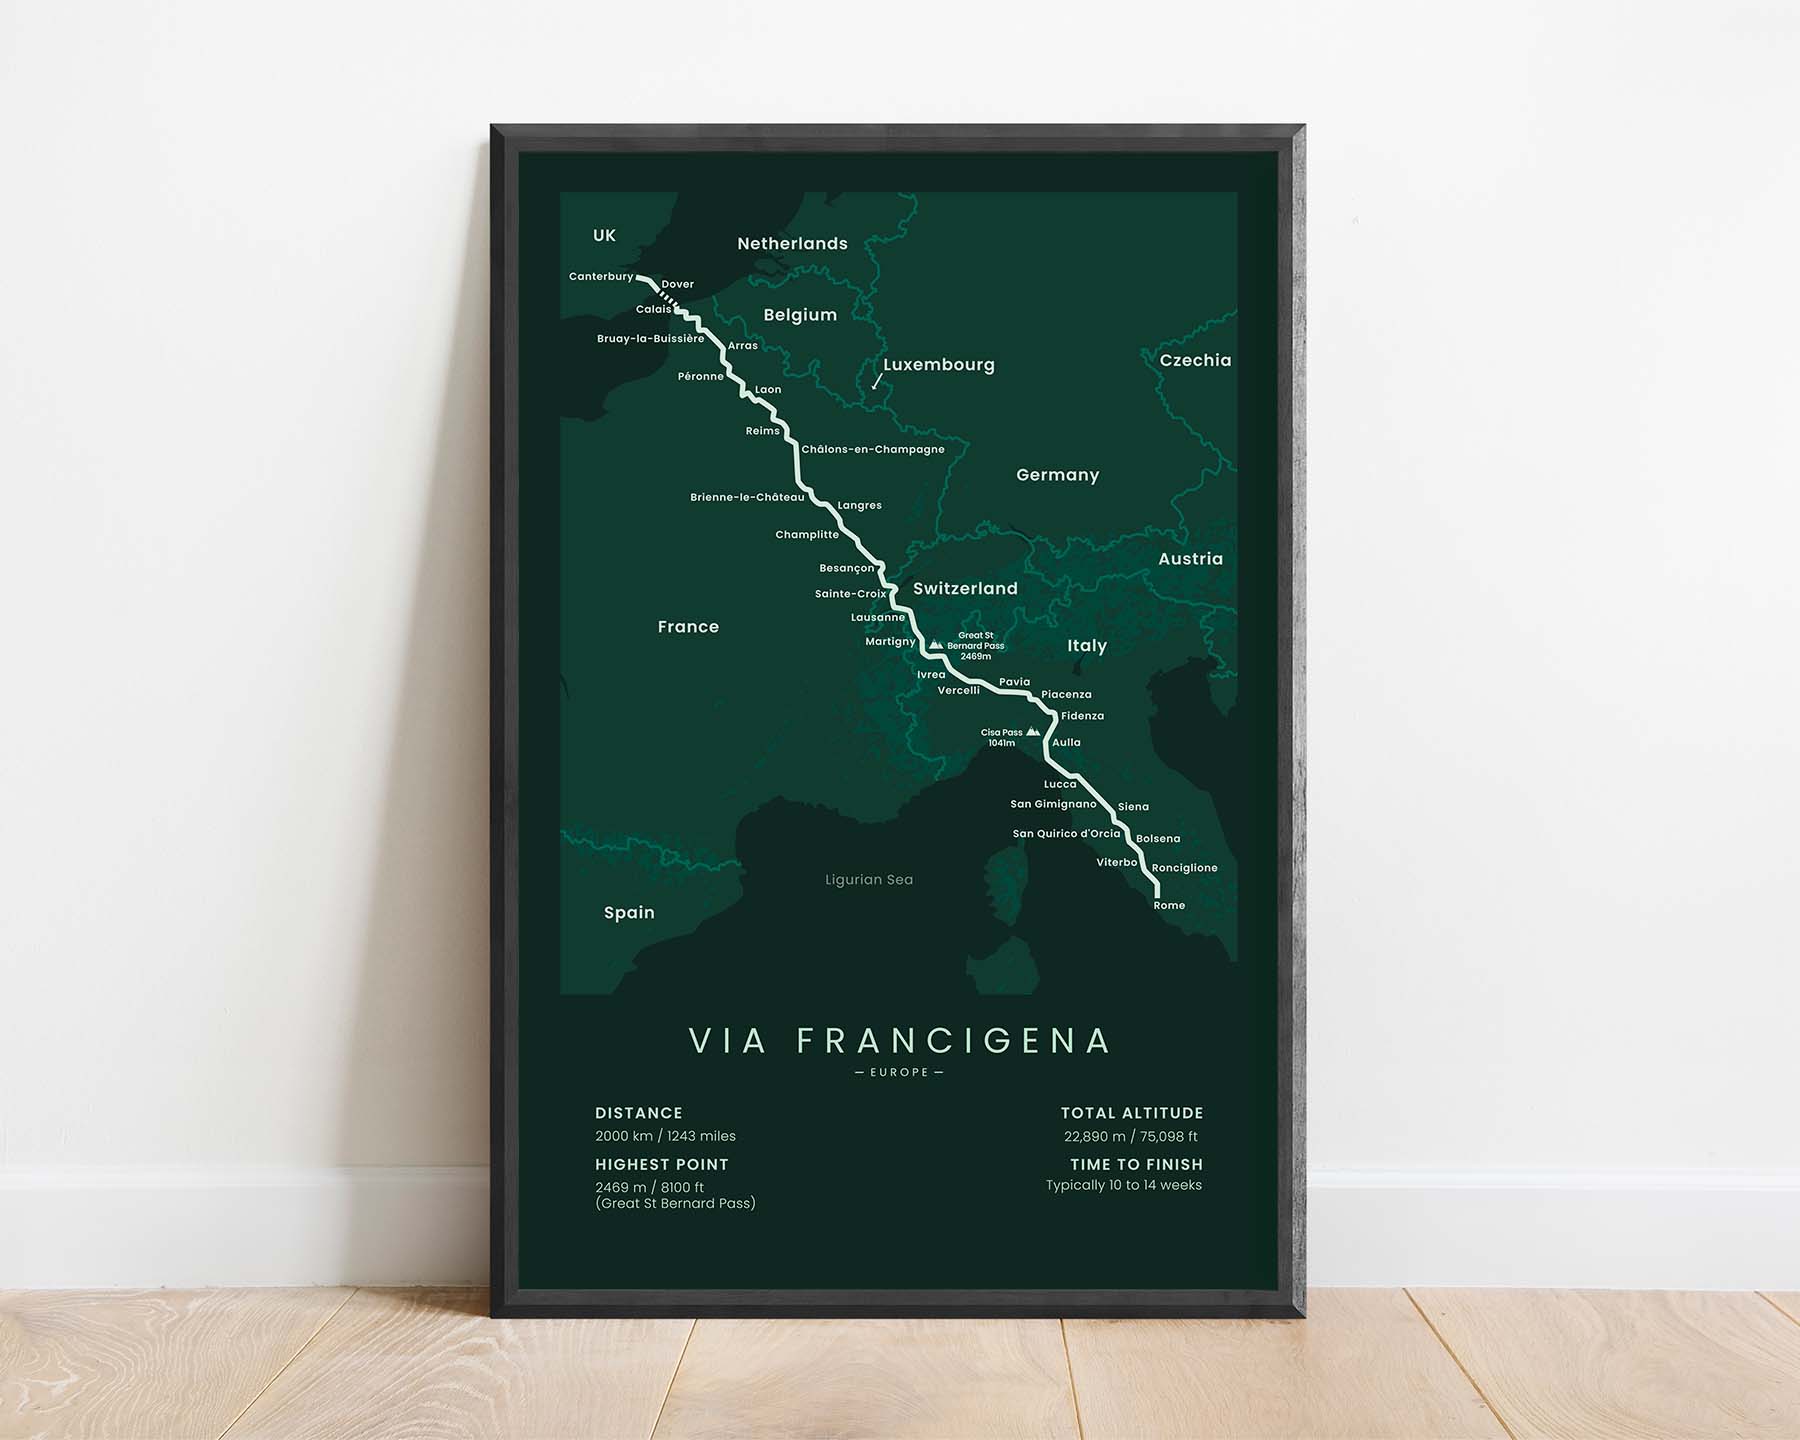 Via Francigena (United Kingdom, Italy, Europe, Canterbury to Rome, France, Switzerland) Trek Map Art with Green Background